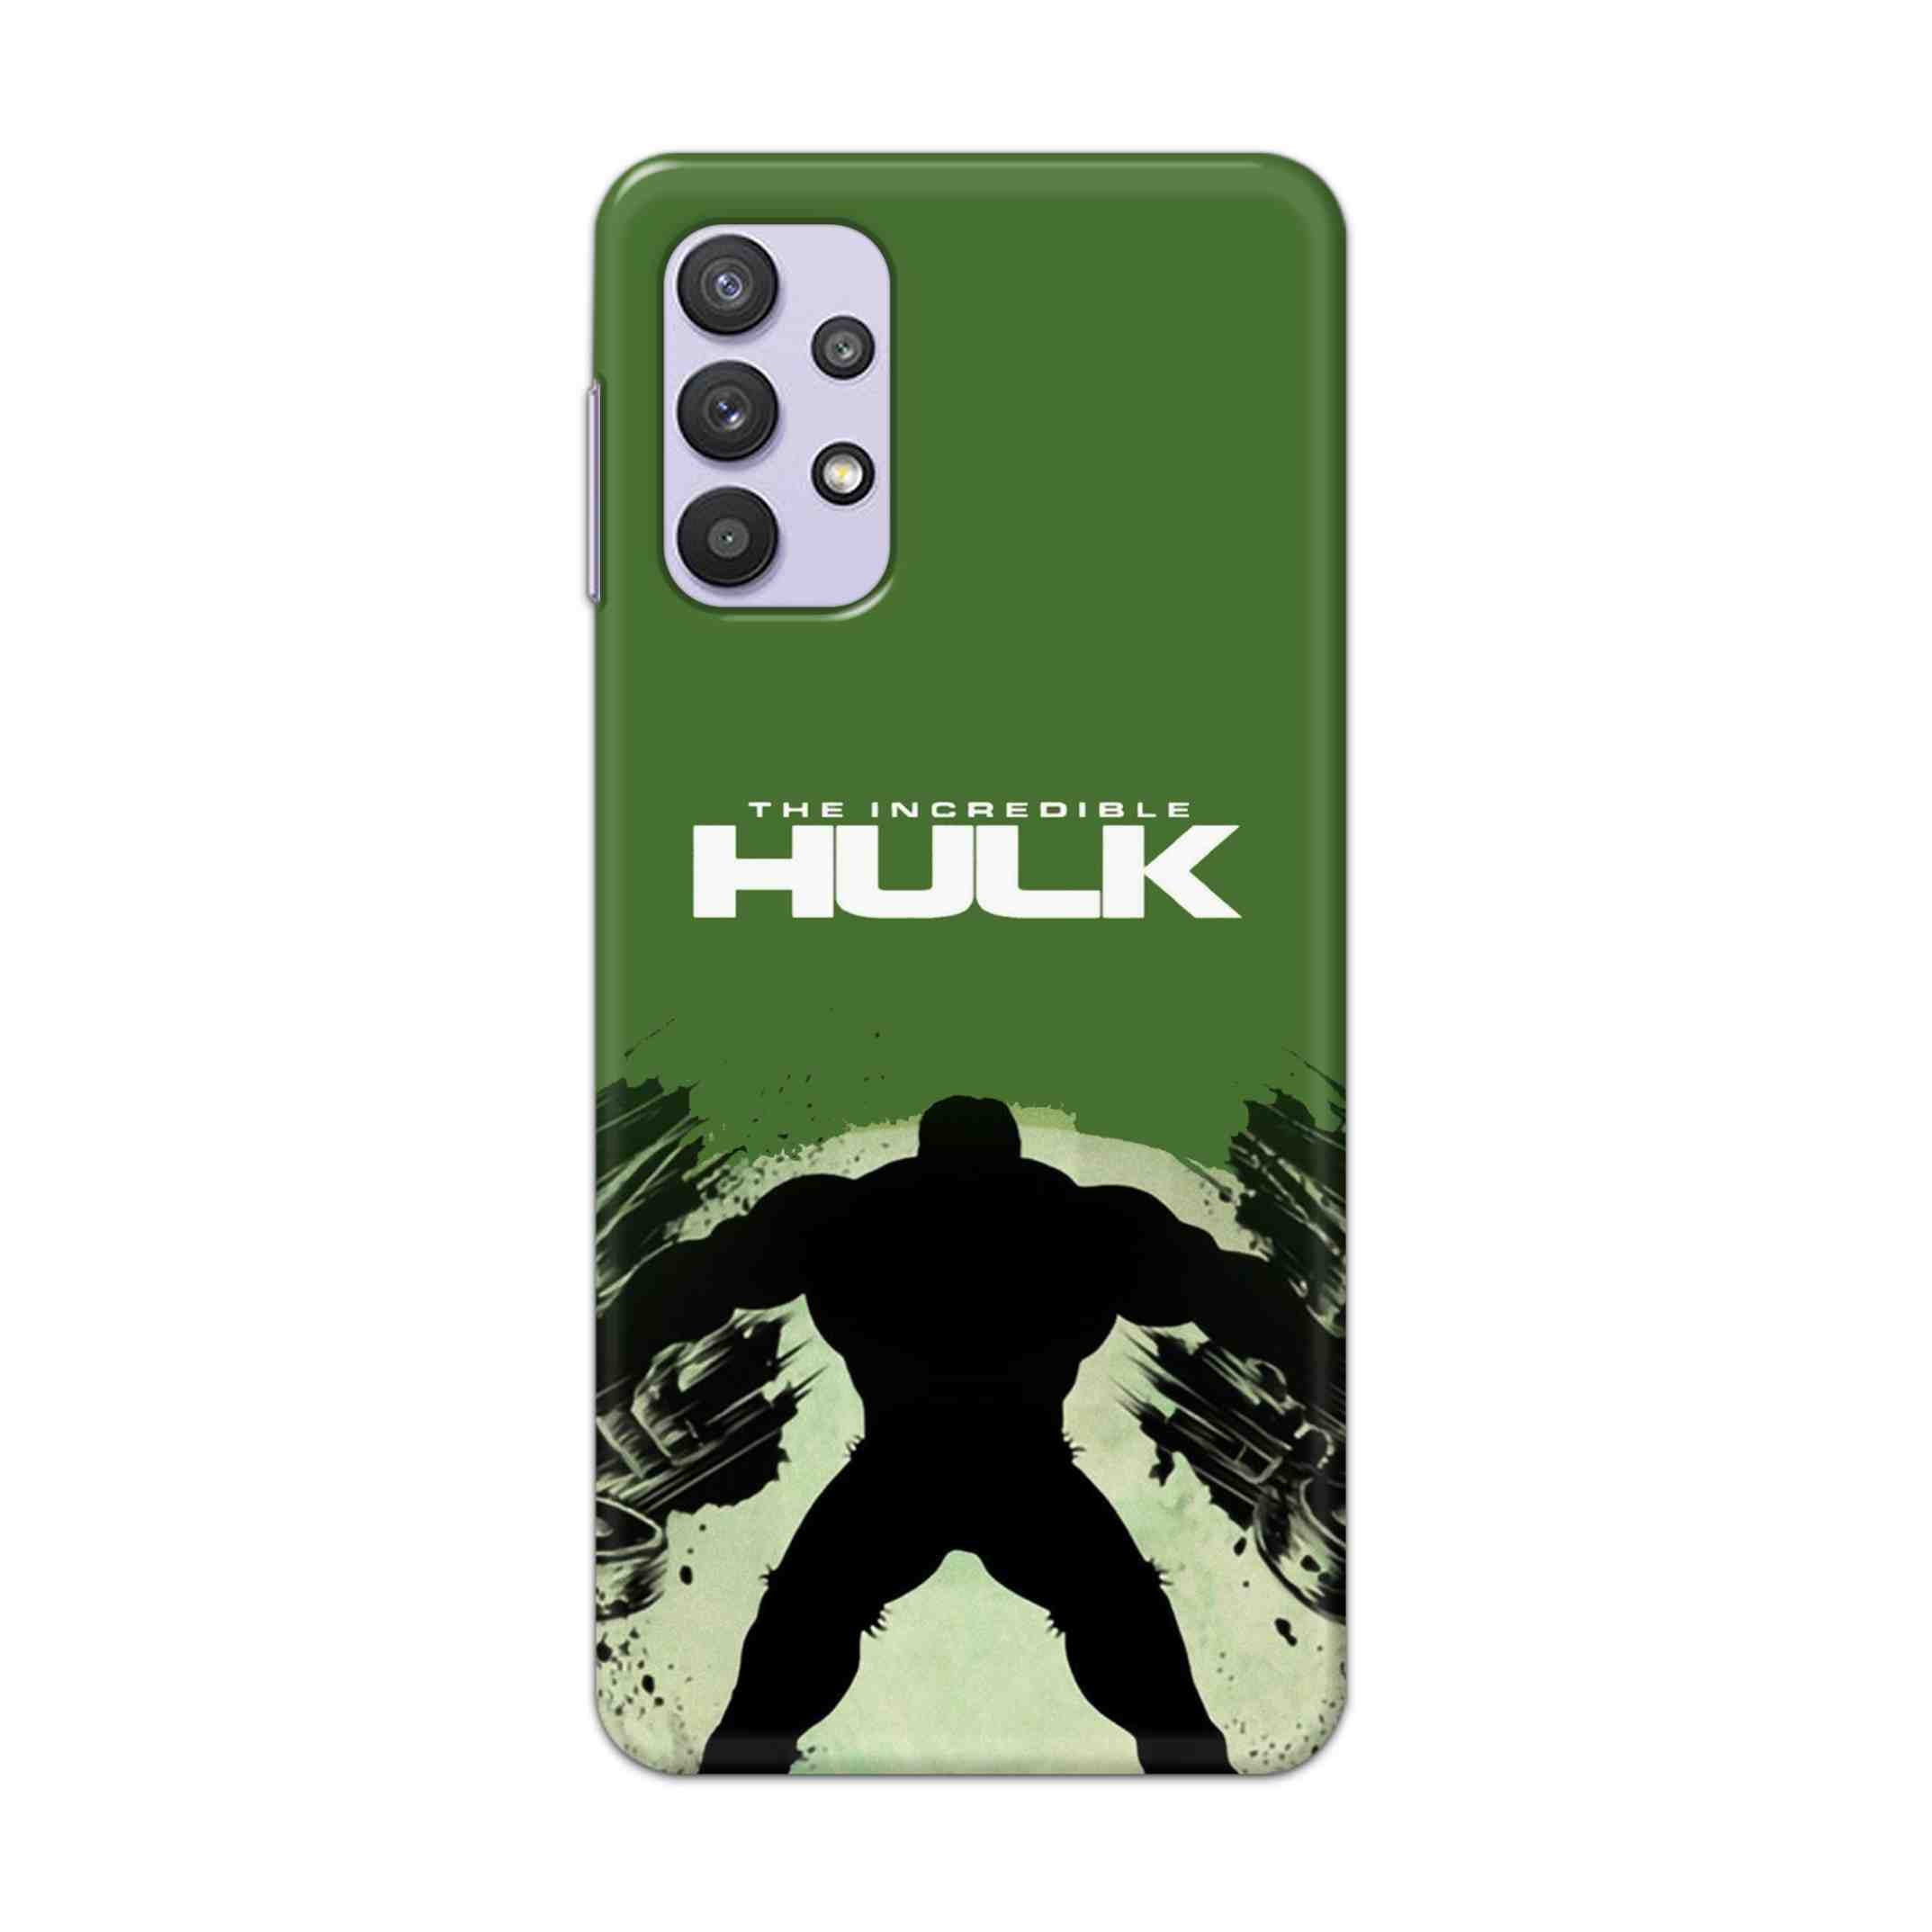 Buy Hulk Hard Back Mobile Phone Case Cover For Samsung A32 4G Online